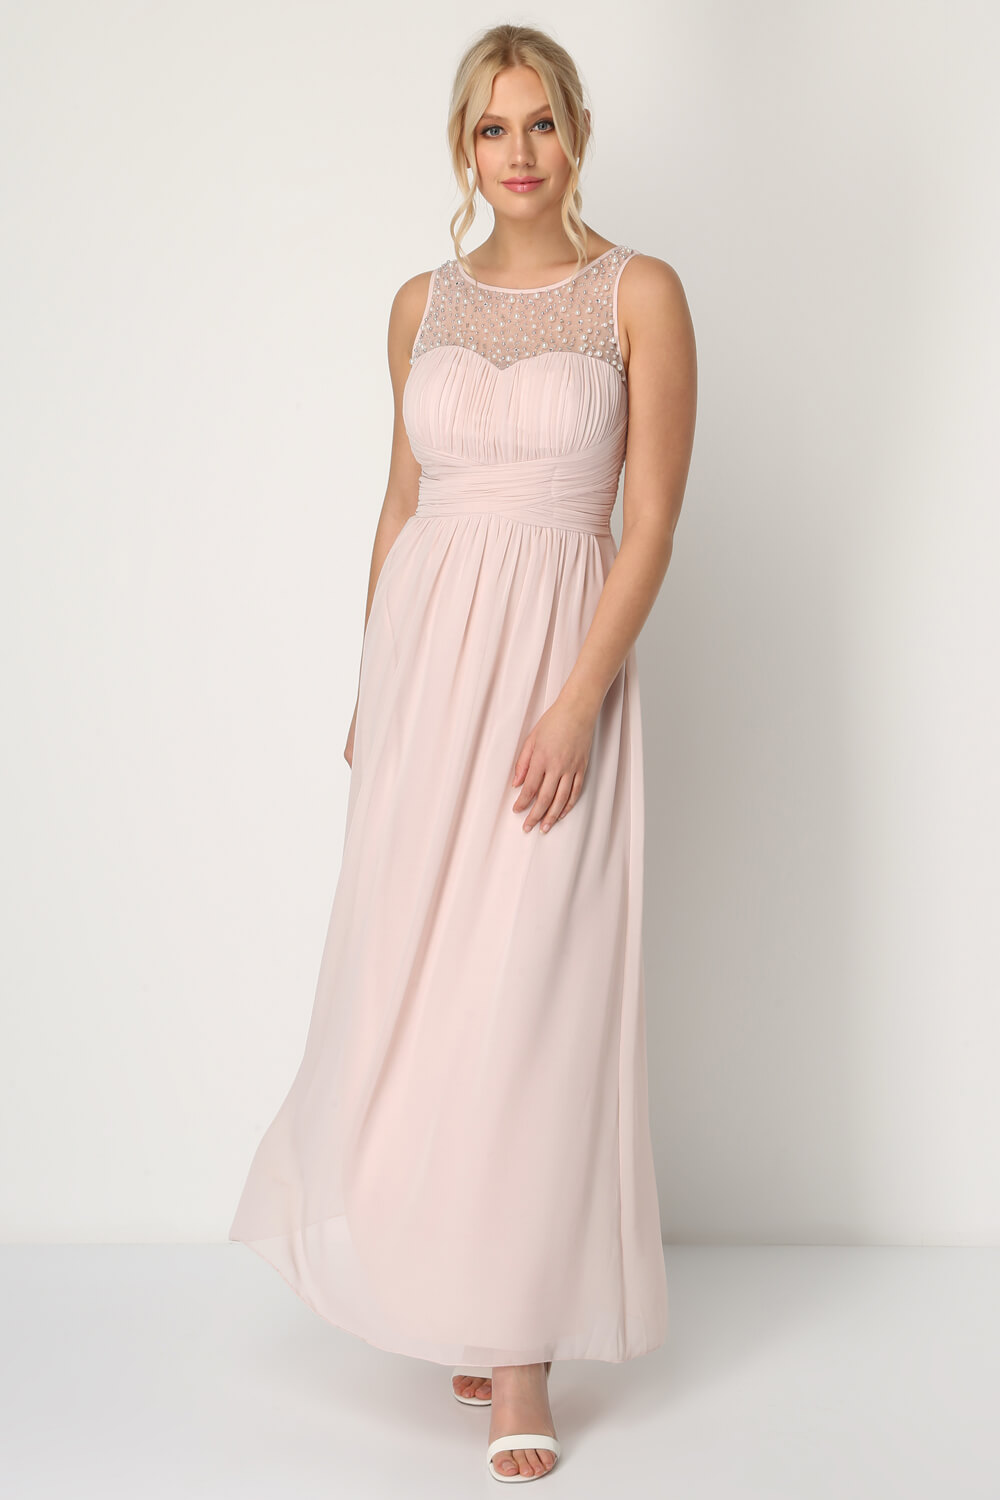 Bead Embellished Maxi Dress in Light Pink - Roman Originals UK